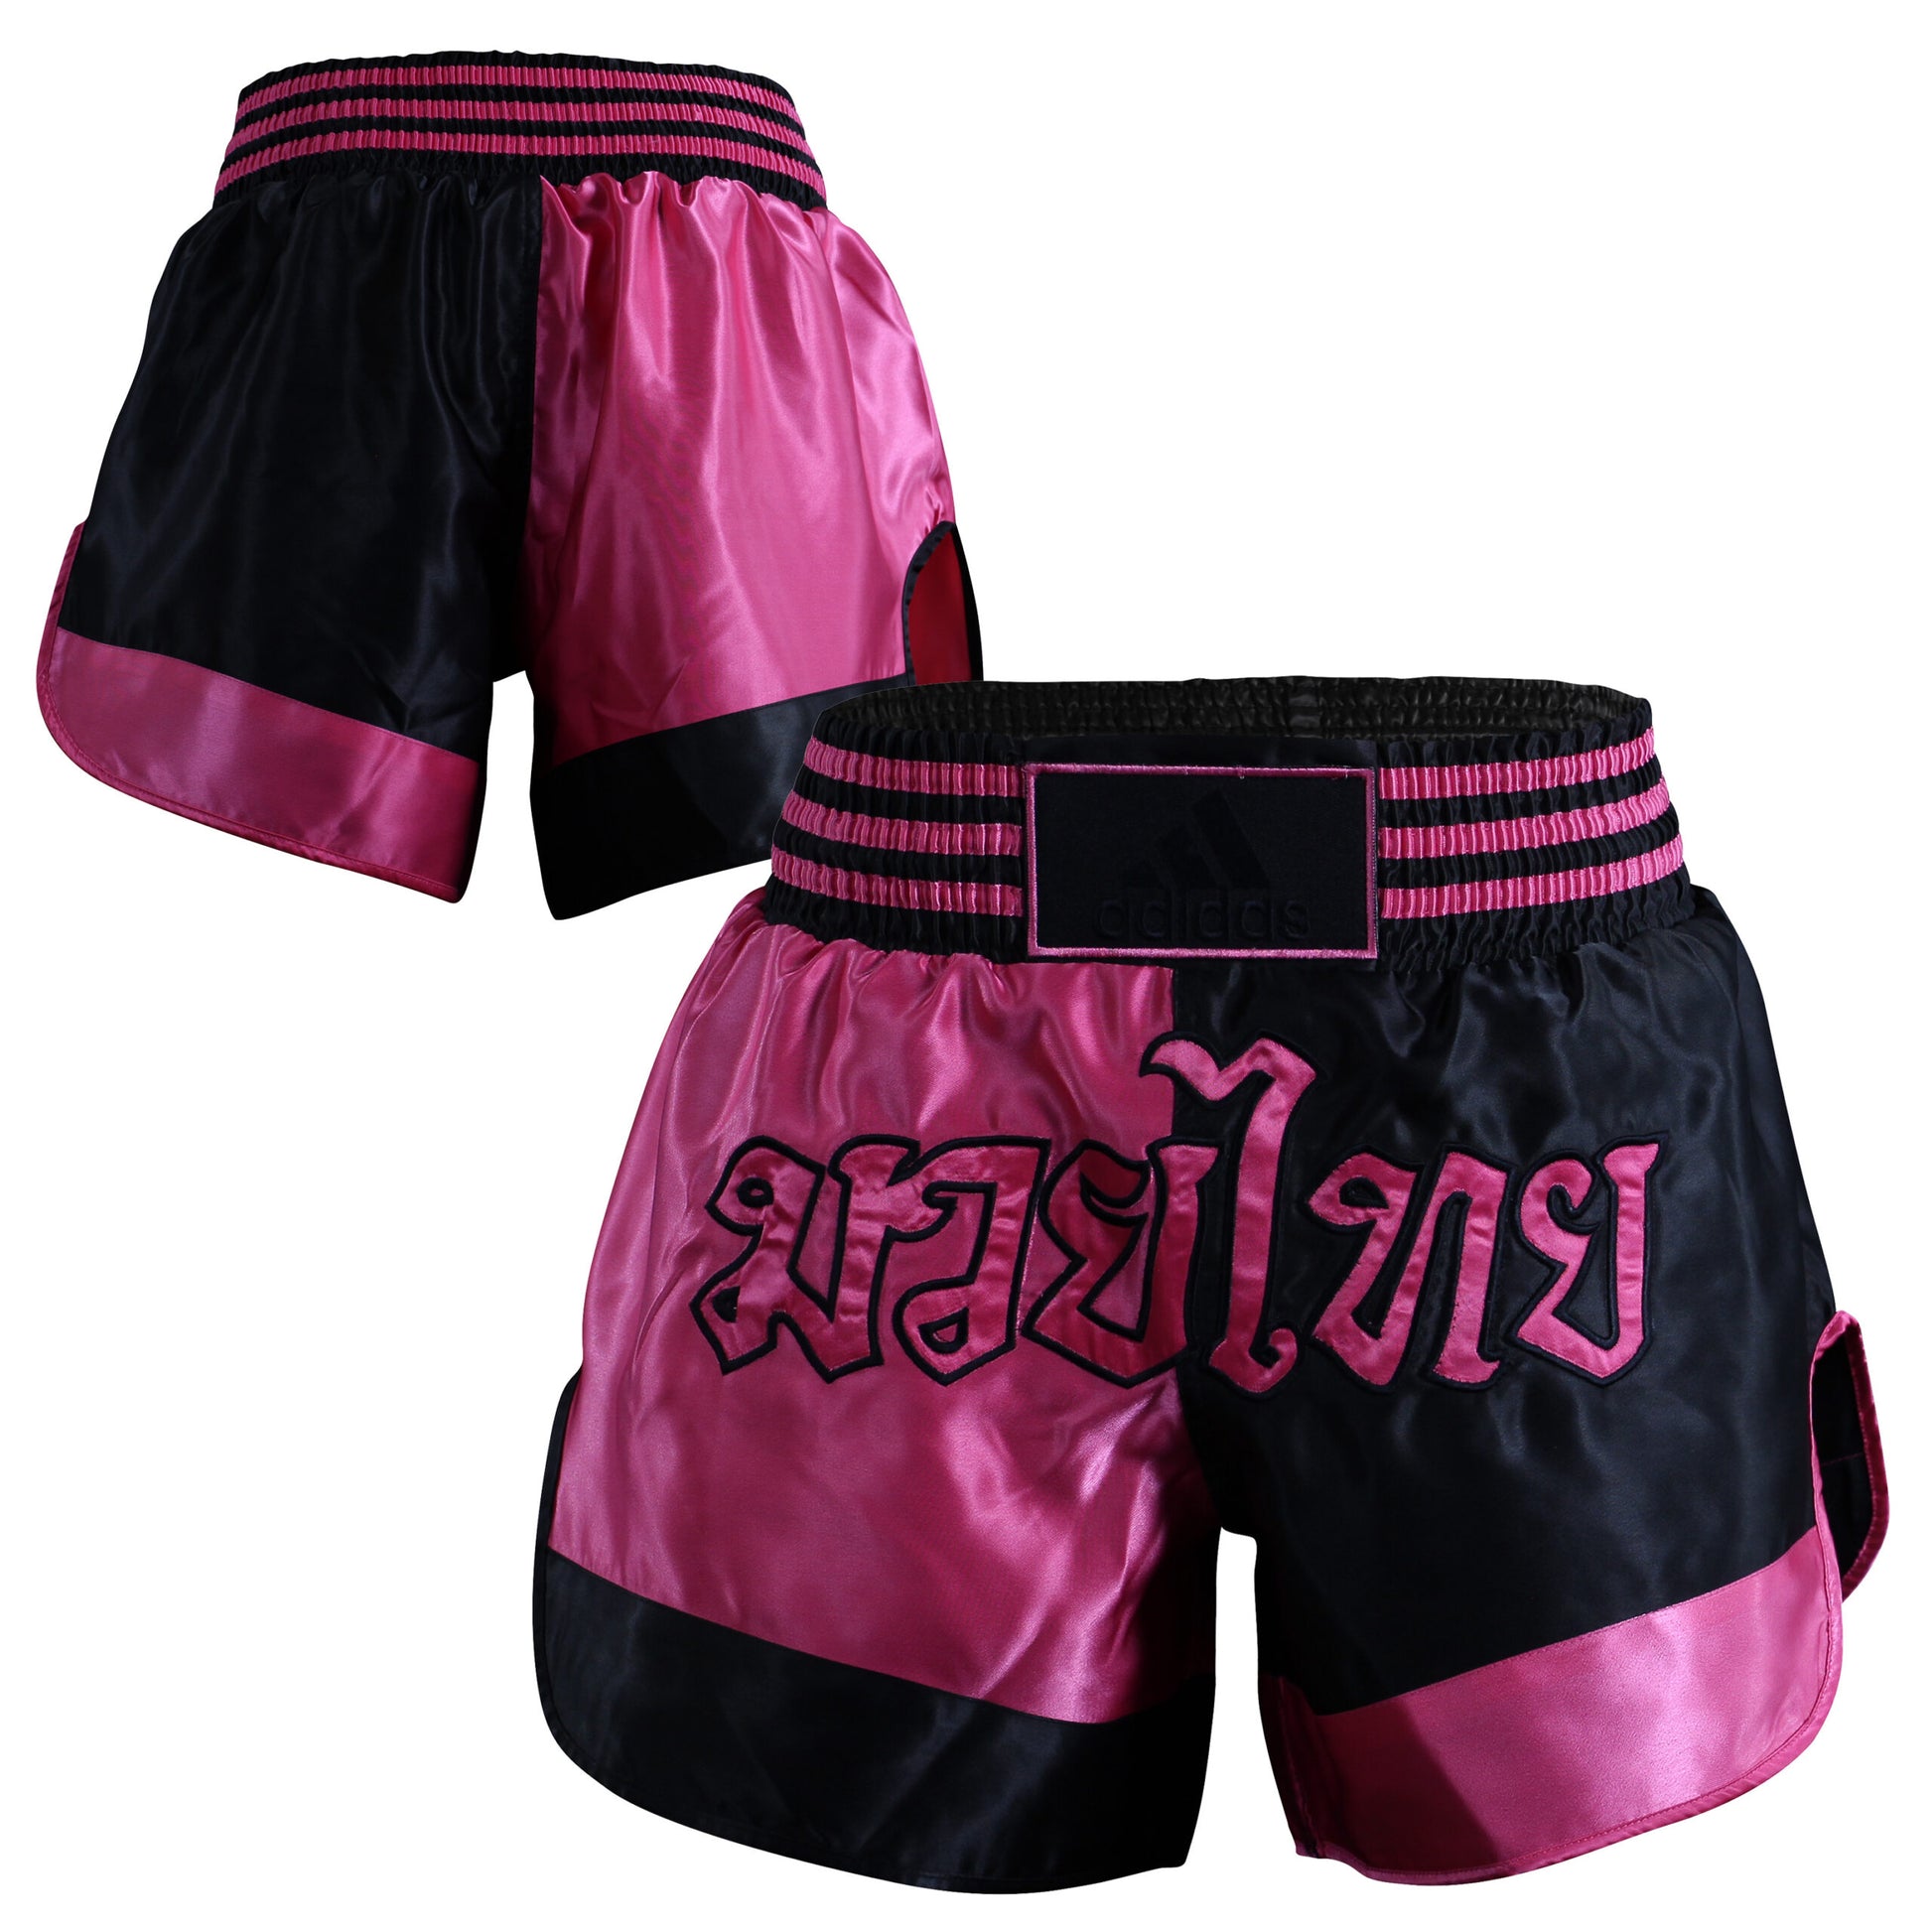 Adisth03 Adidas Muay Thai Boxing Shorts Pink Black 01